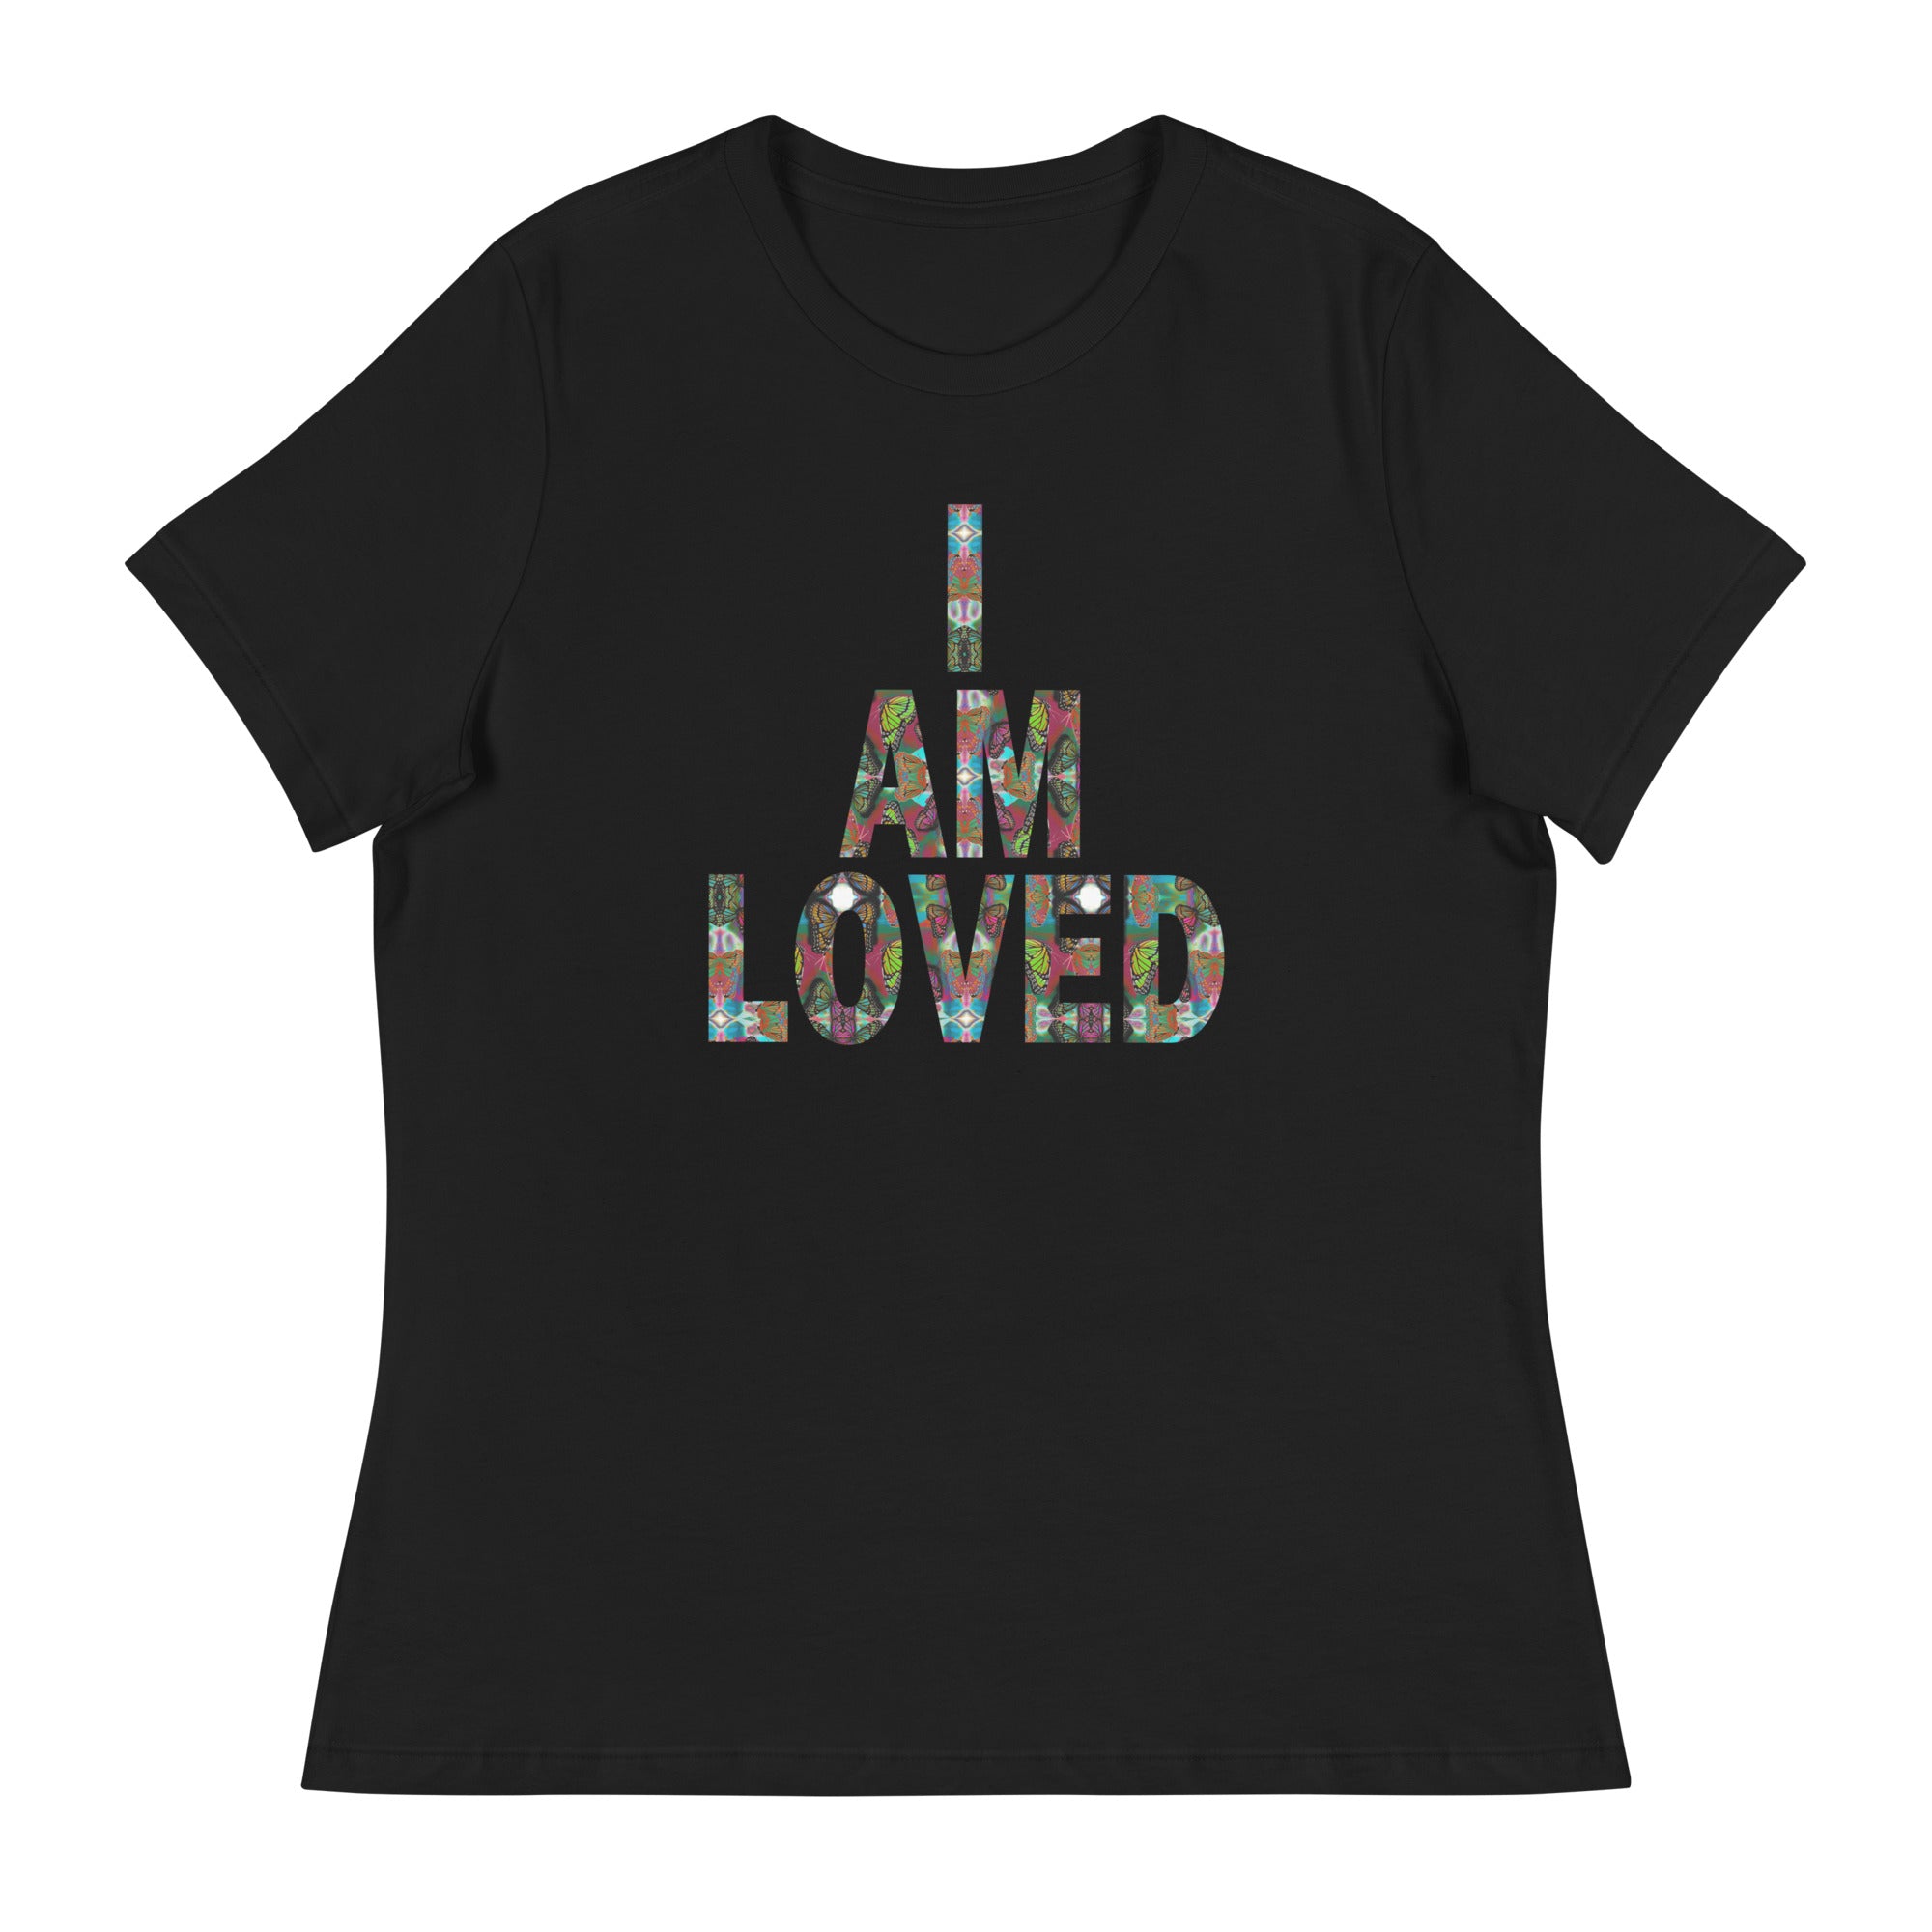 I AM LOVED ~ Women's Graphic T-Shirt, Butterfly Word Art Short Sleeve Top